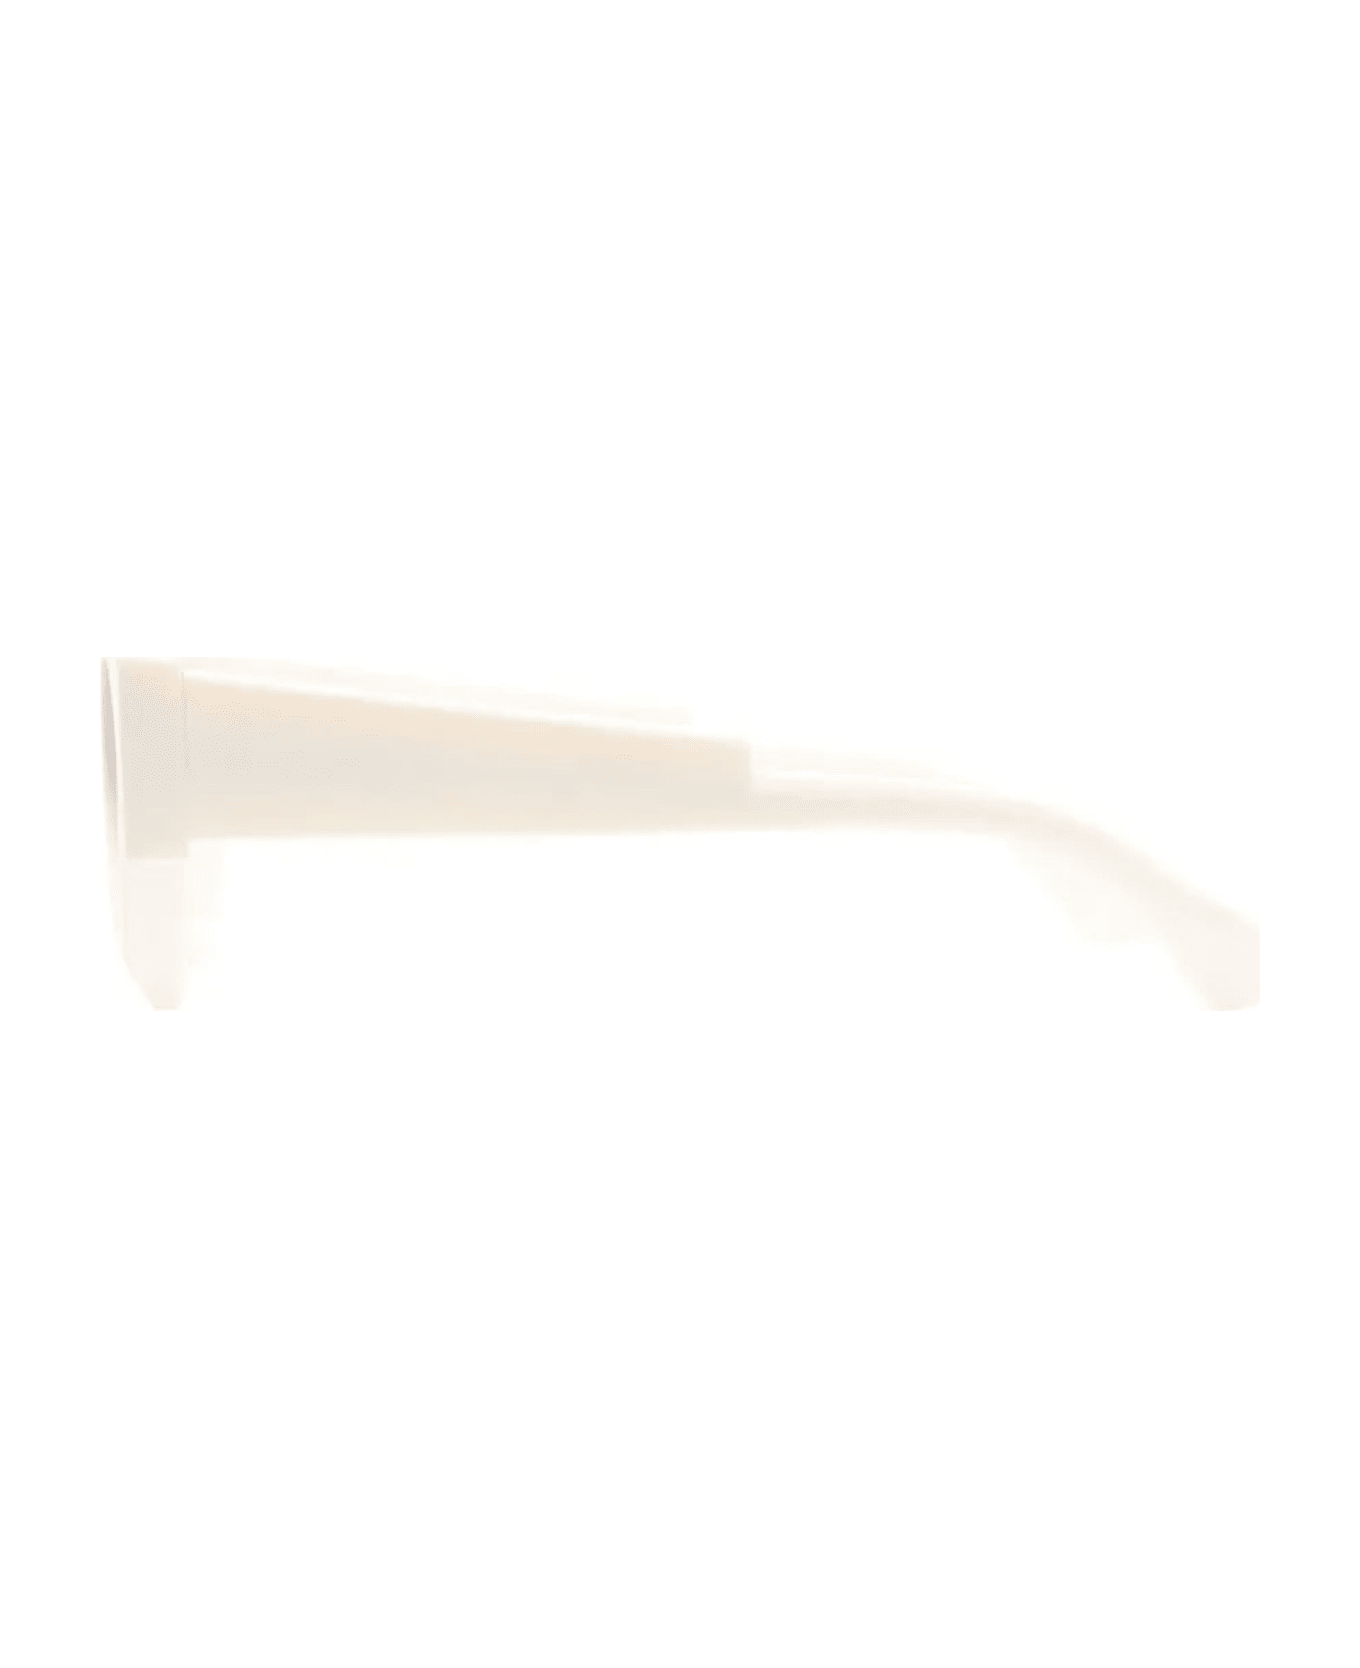 Kuboraum Mask X22 - Chalk White Sunglasses - White サングラス